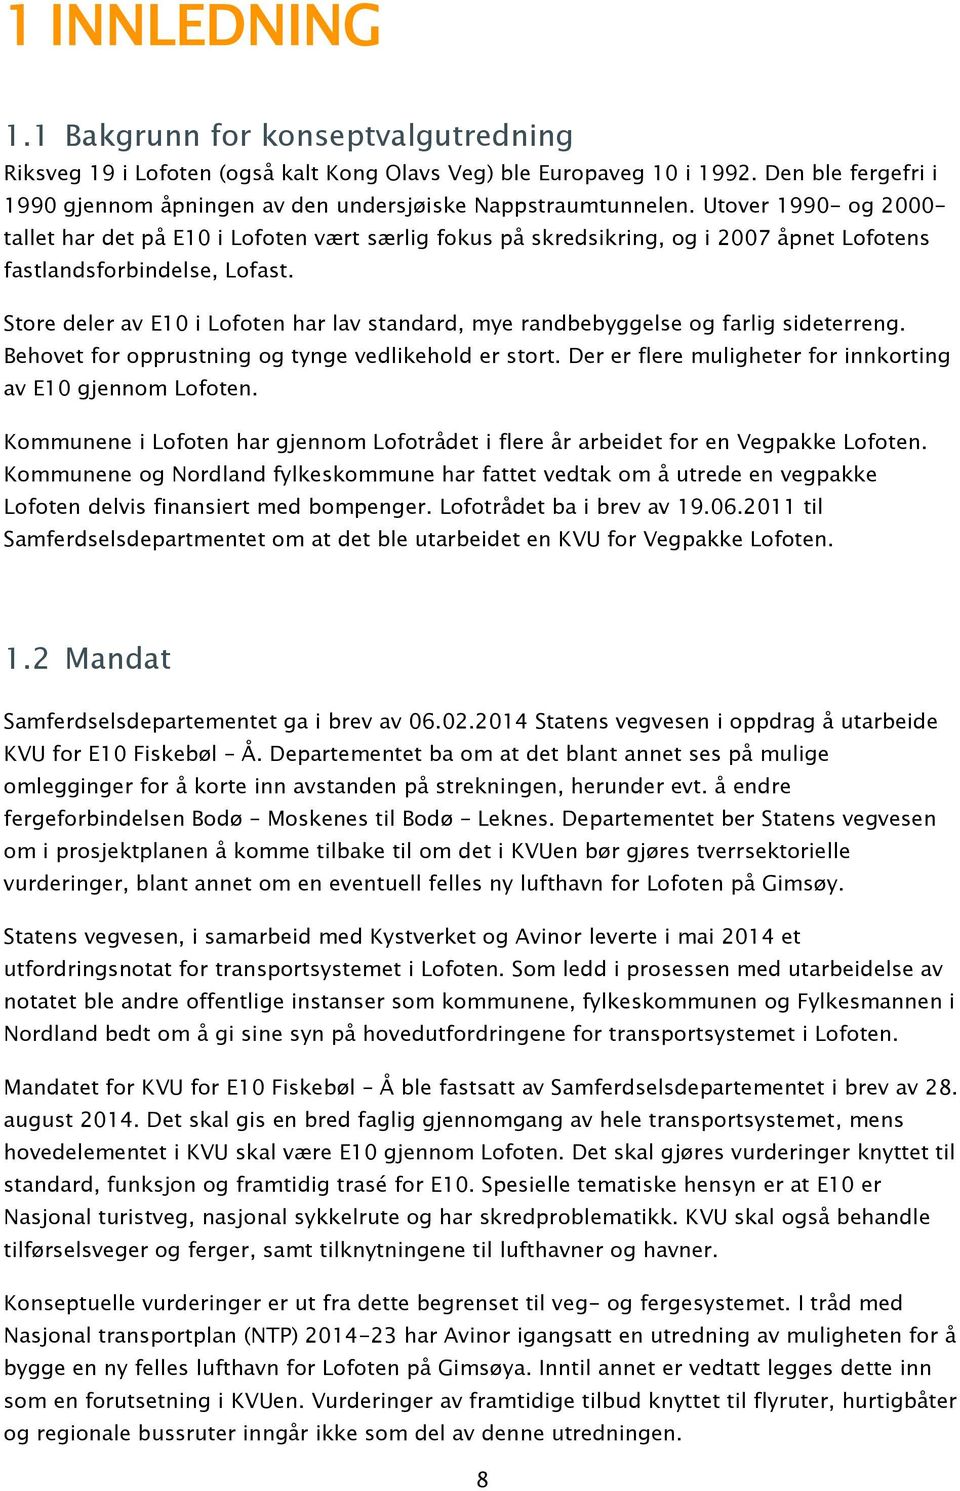 Utover 1990- og 2000- tallet har det på E10 i Lofoten vært særlig fokus på skredsikring, og i 2007 åpnet Lofotens fastlandsforbindelse, Lofast.